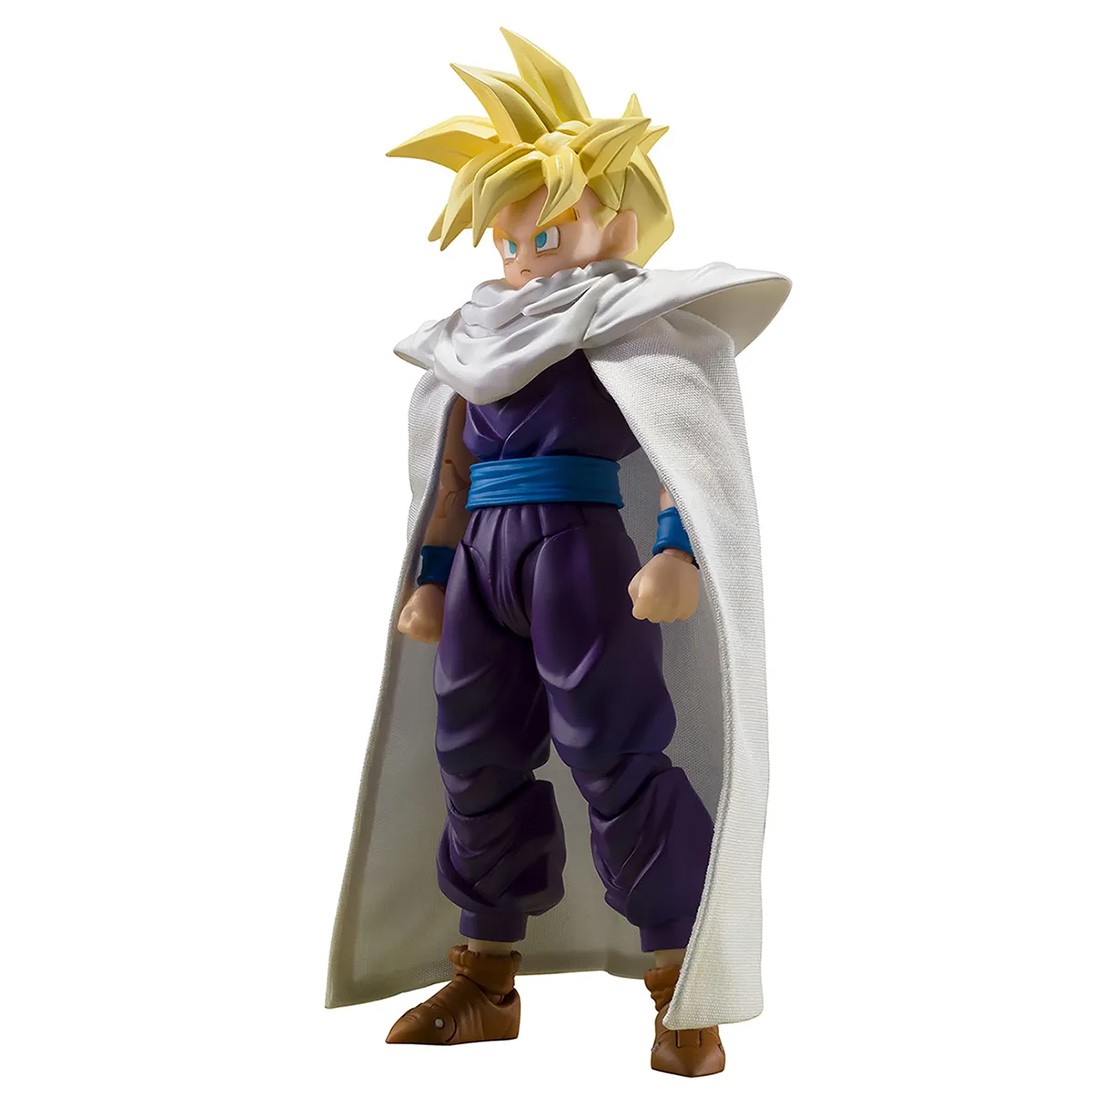 PREORDER - Bandai S.H.Figuarts Dragon Ball Z The Warrior who Surpassed Goku Super Saiyan Son Gohan Figure (purple)